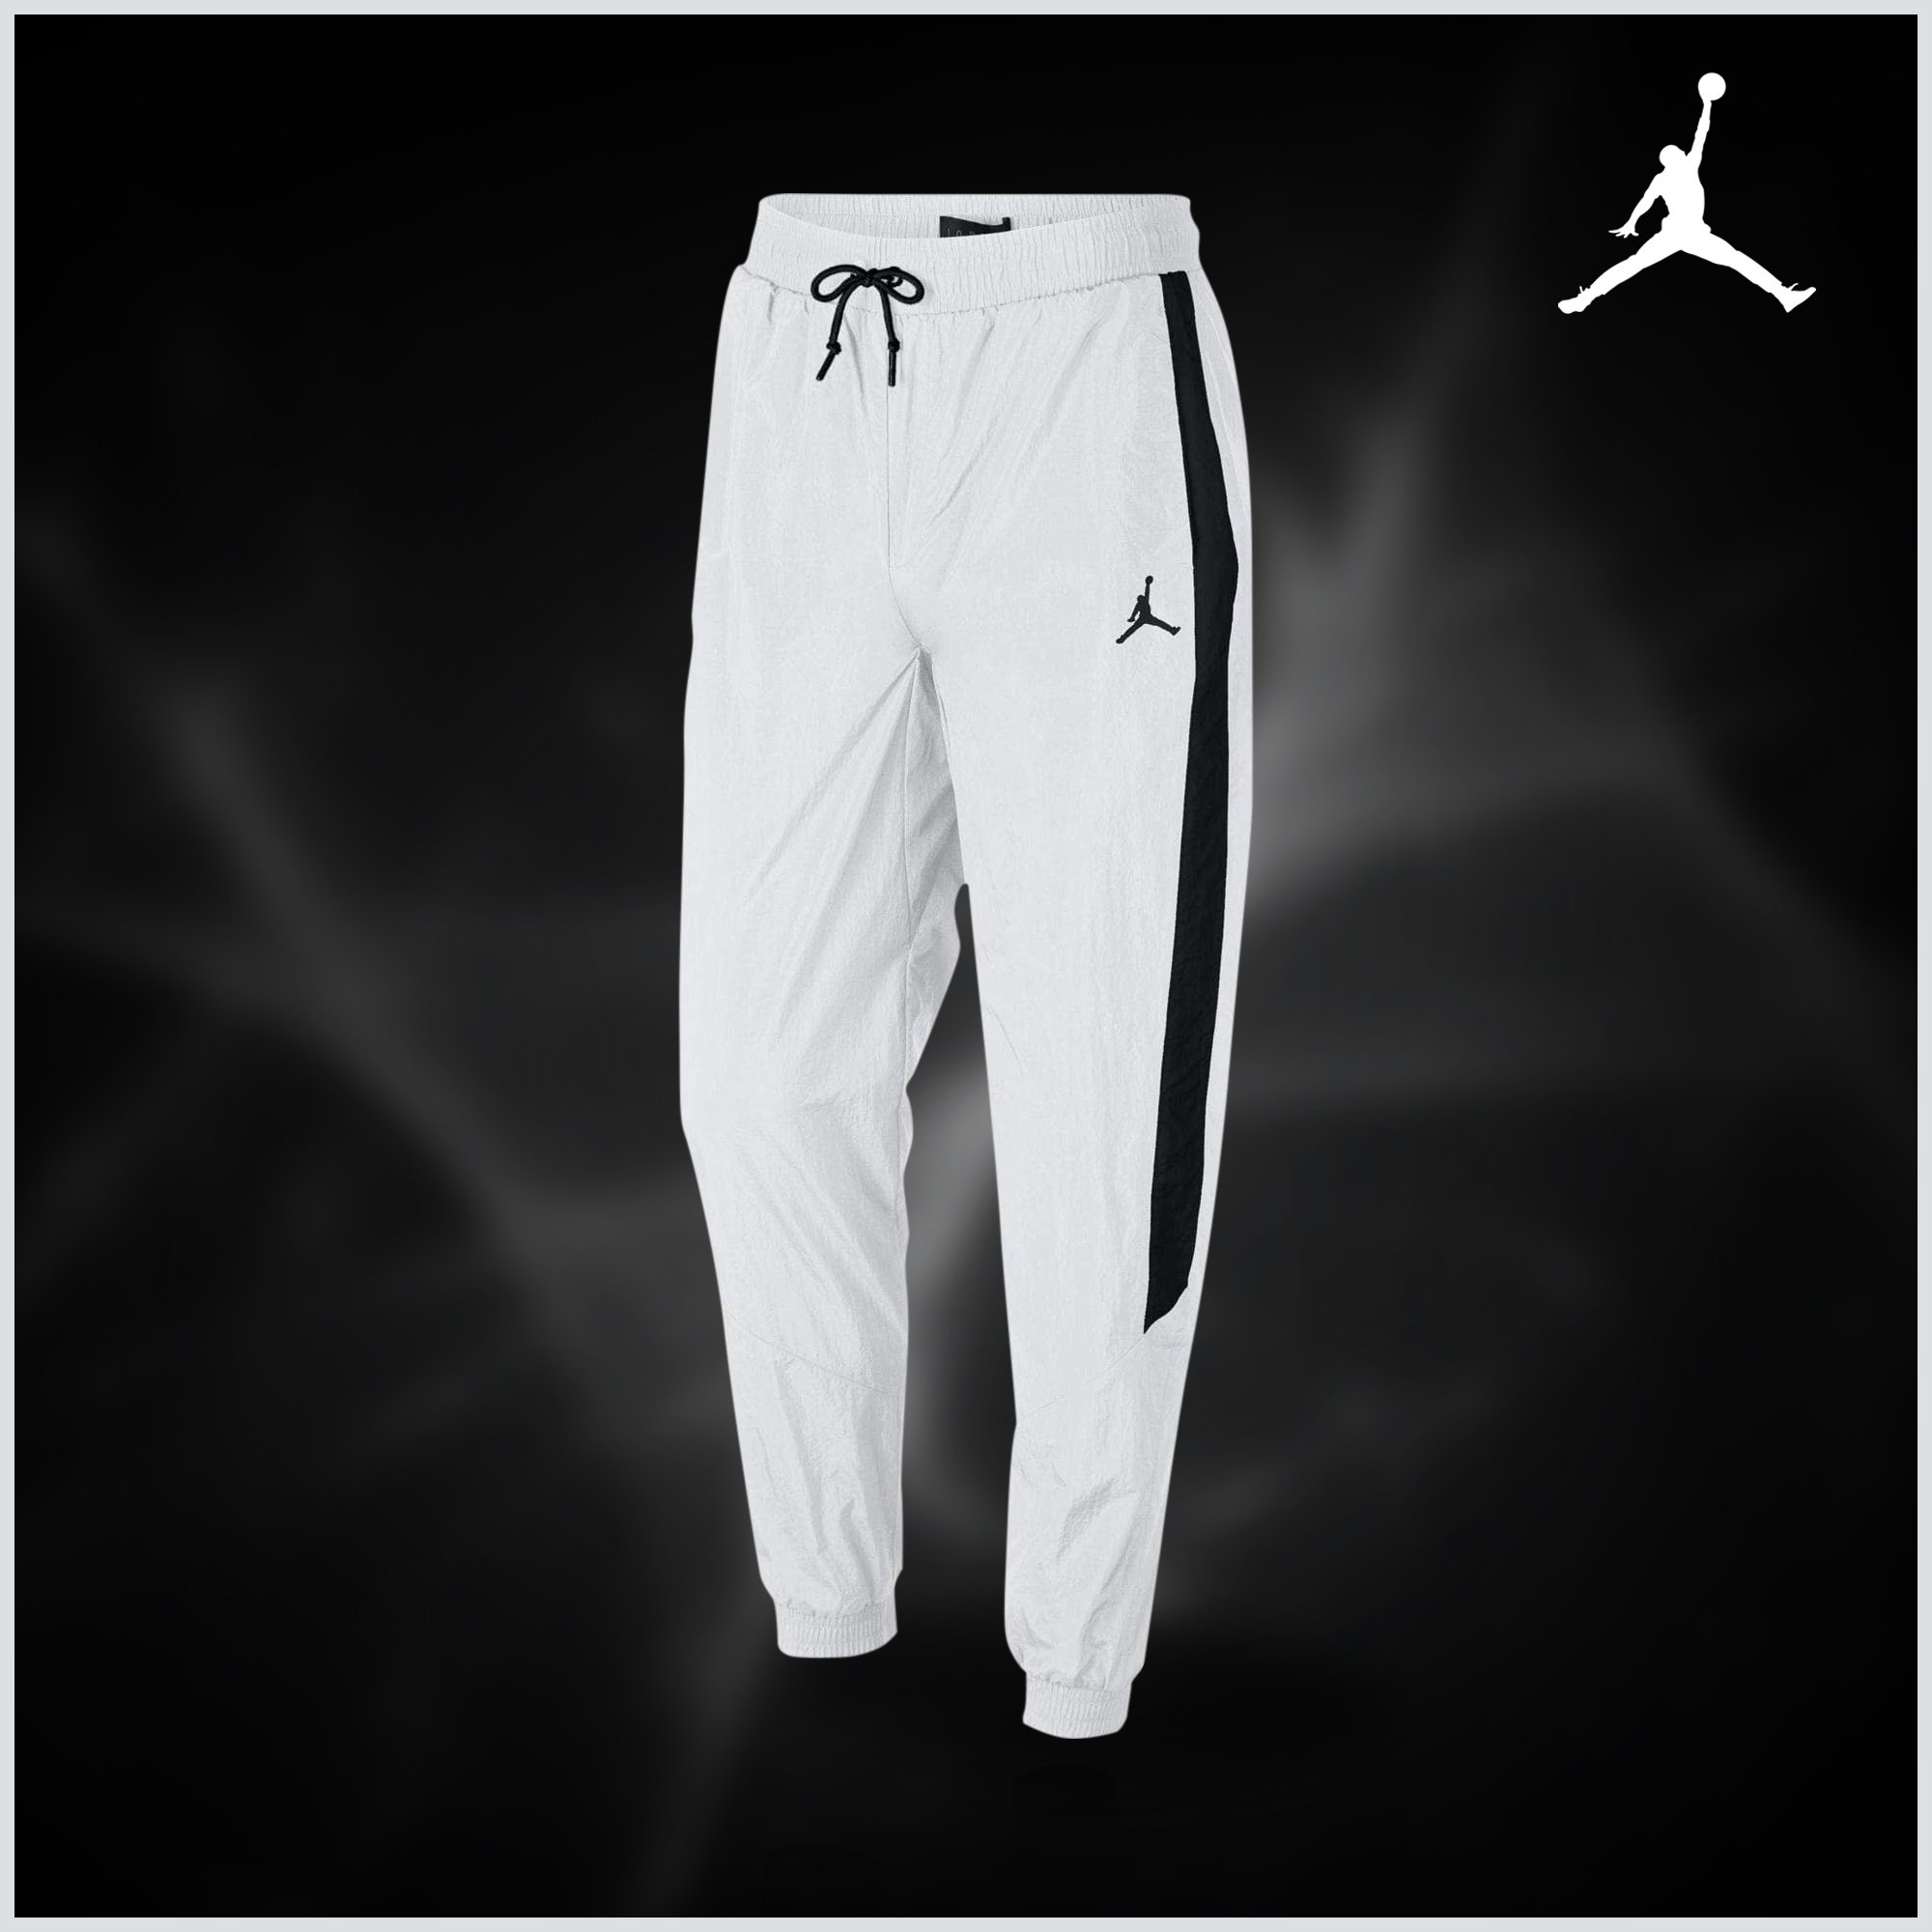 GB'S Sneaker Shop on X: "Air Jordan Sportswear Diamond Track Pants Men's  (M-3XL) $80 AQ2696-100 #jordan #airjordan #apparel #gbsneakers  —————————————— 24/7 Customer Service 📞 Call/Text to Order: 1-877-SHOP-GB'S  (1-877-746-7427) 📧Email Orders: order ...